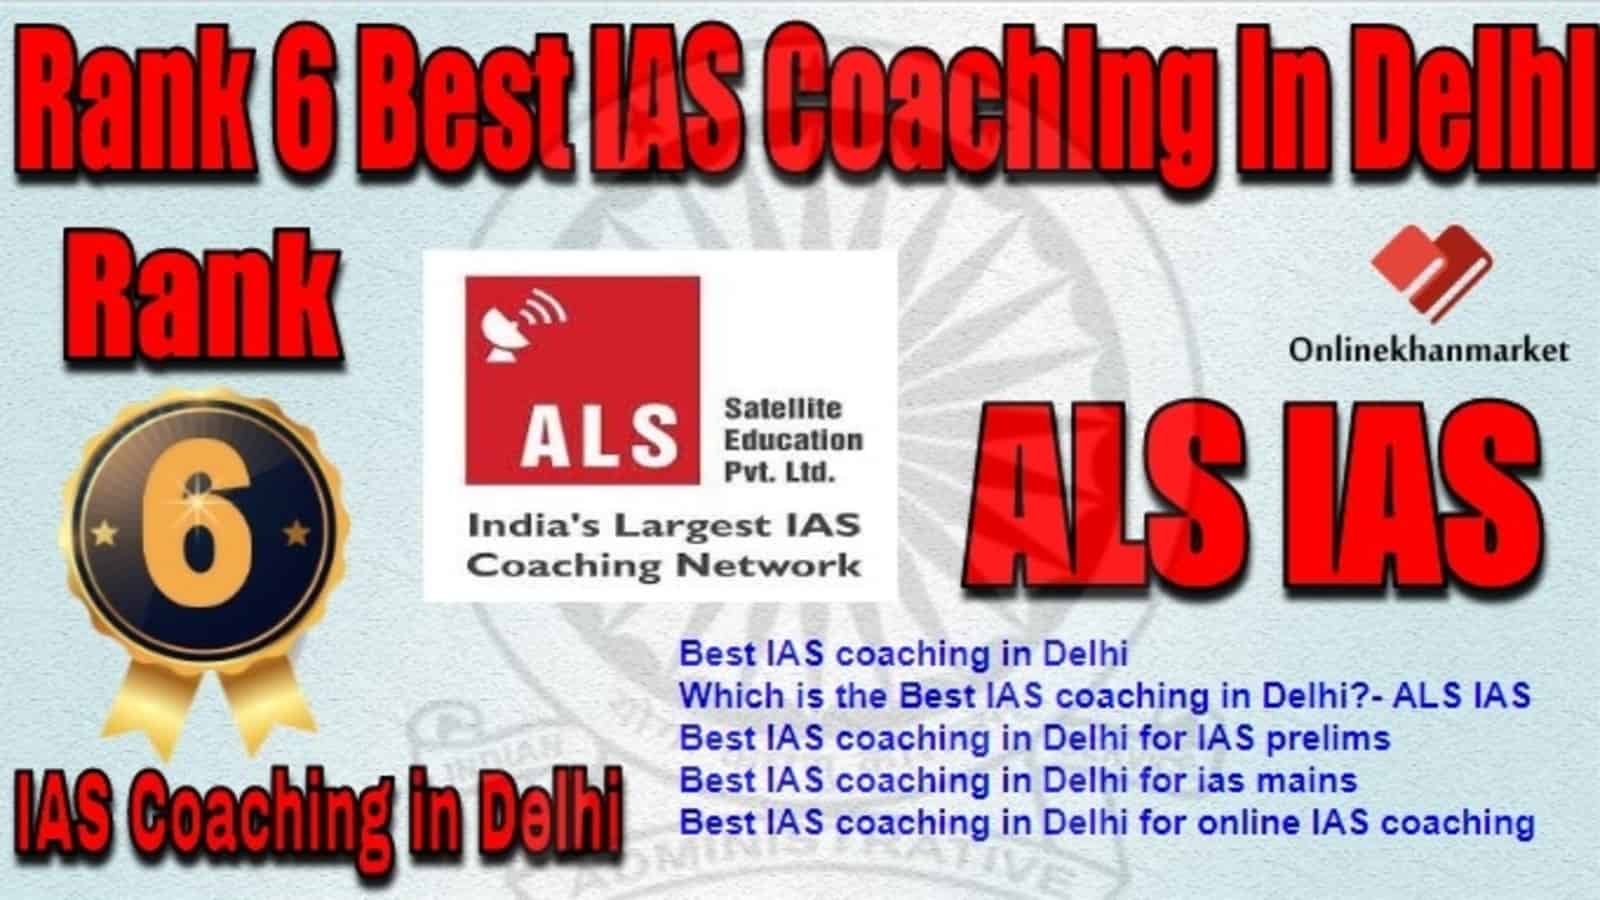 Rank 6 Best IAS Coaching in Delhi ALS IAS Delhi